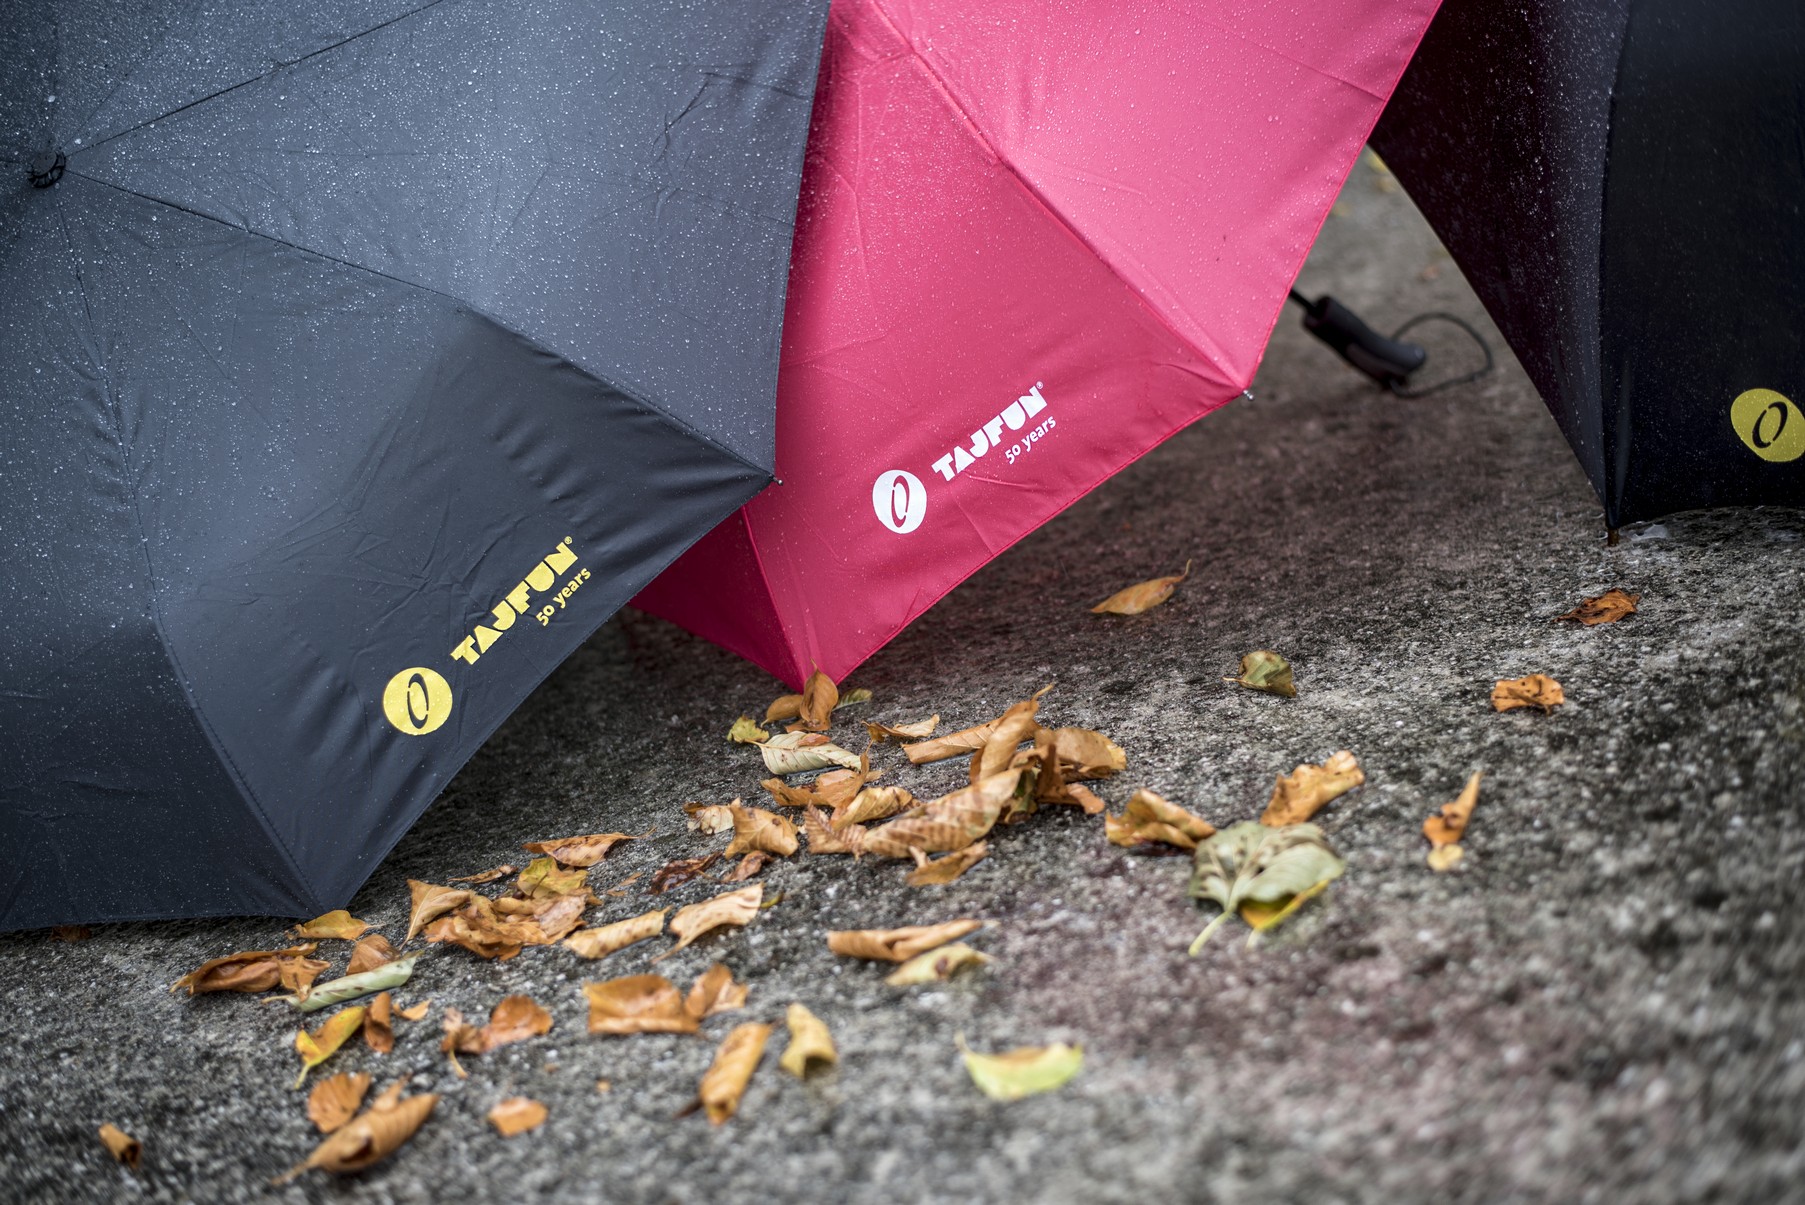 Tajfun umbrella - foldable